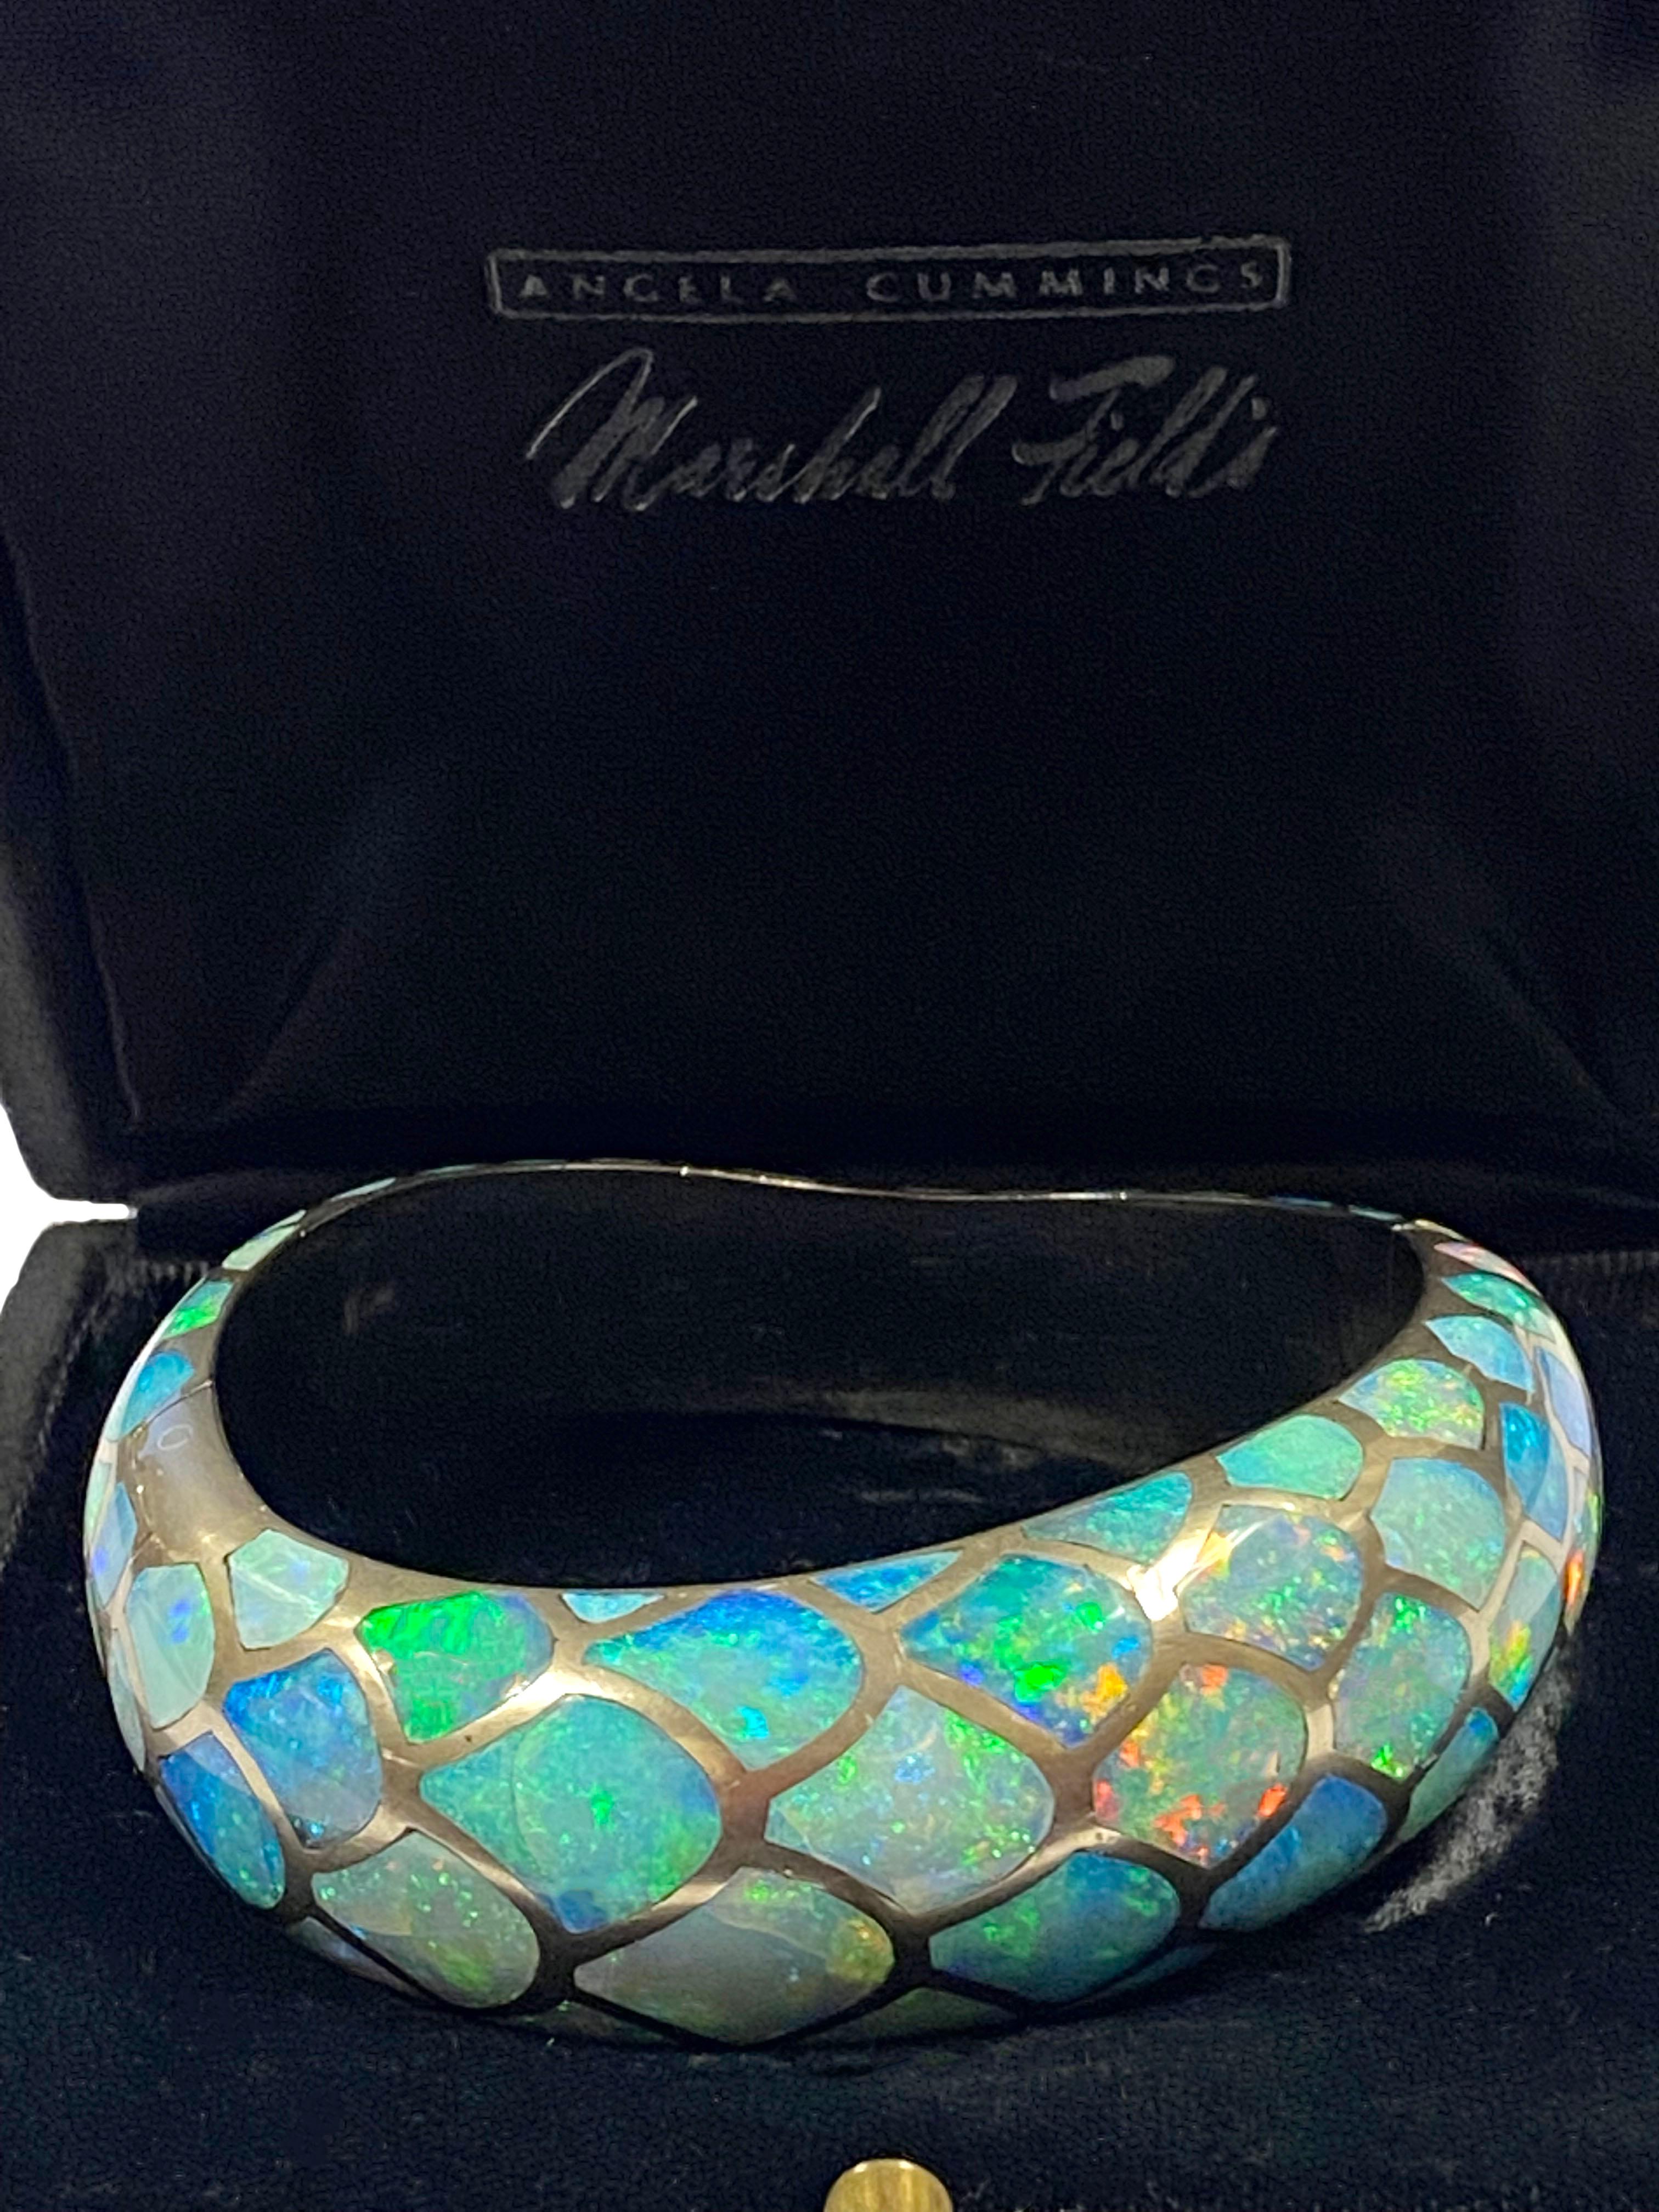 Angela Cummings White Gold and Opal Snakeskin Bangle Bracelet For Sale 6